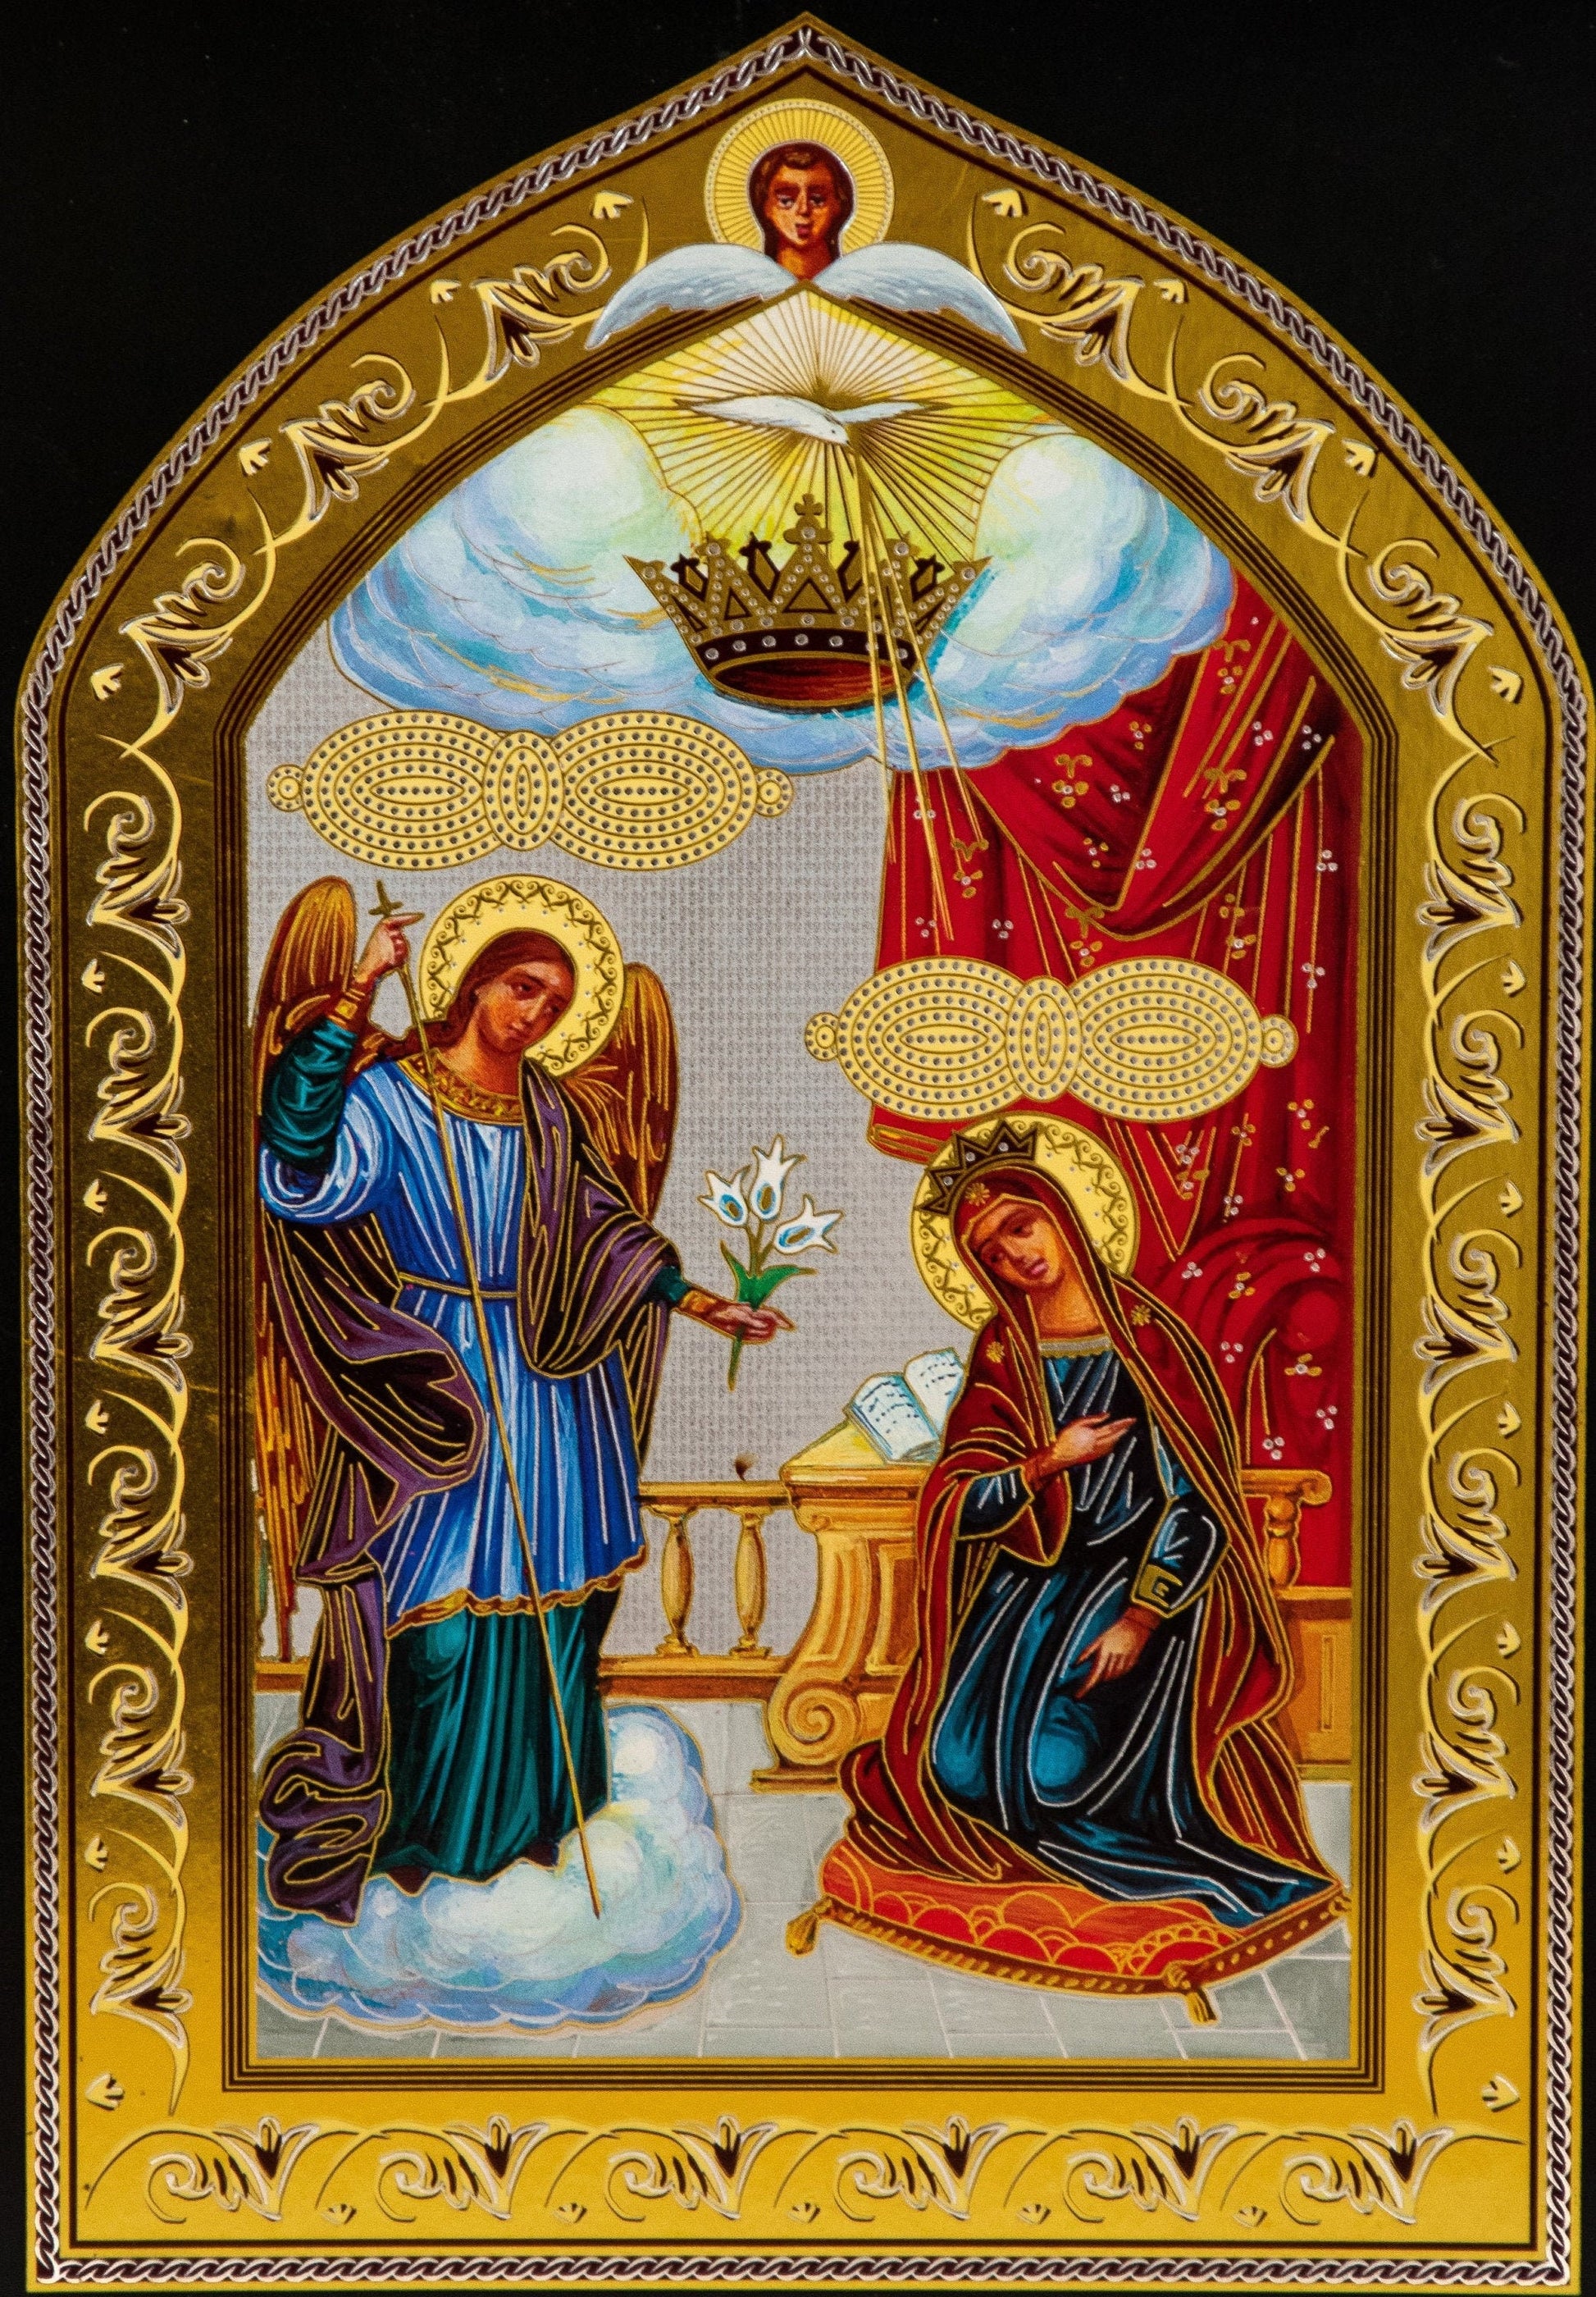 The Annunciation Virgin Mary icon, Greek Orthodox Icon, Mother of God Byzantine art, Theotokos handmade wall hanging wood plaque 27x21cm TheHolyArt